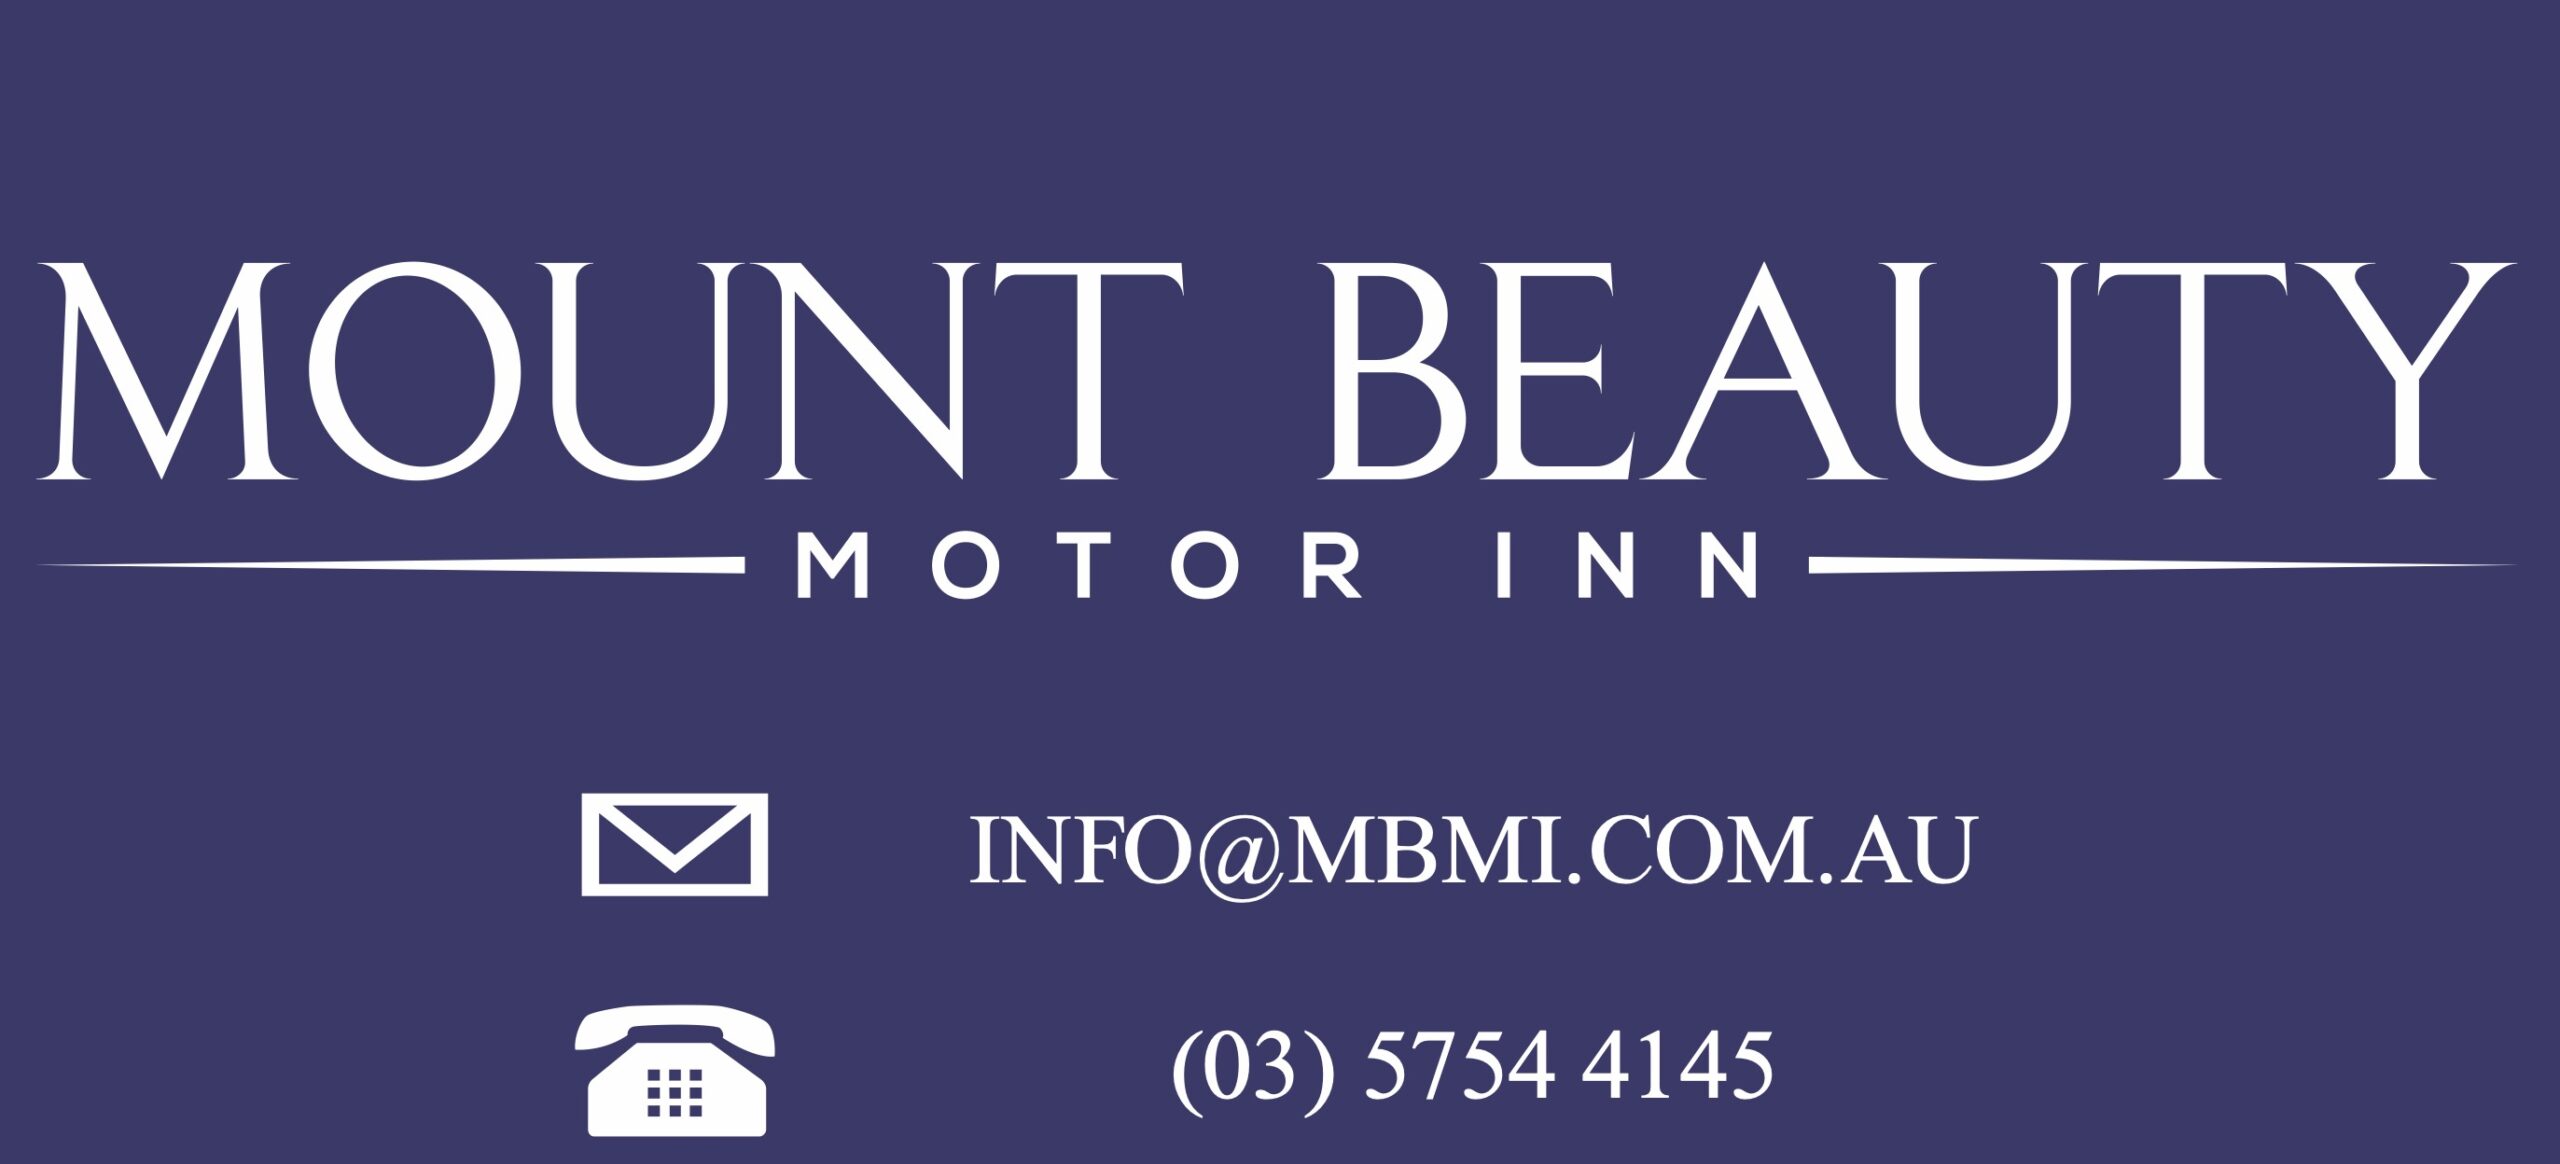 Mount Beauty Motor Inn